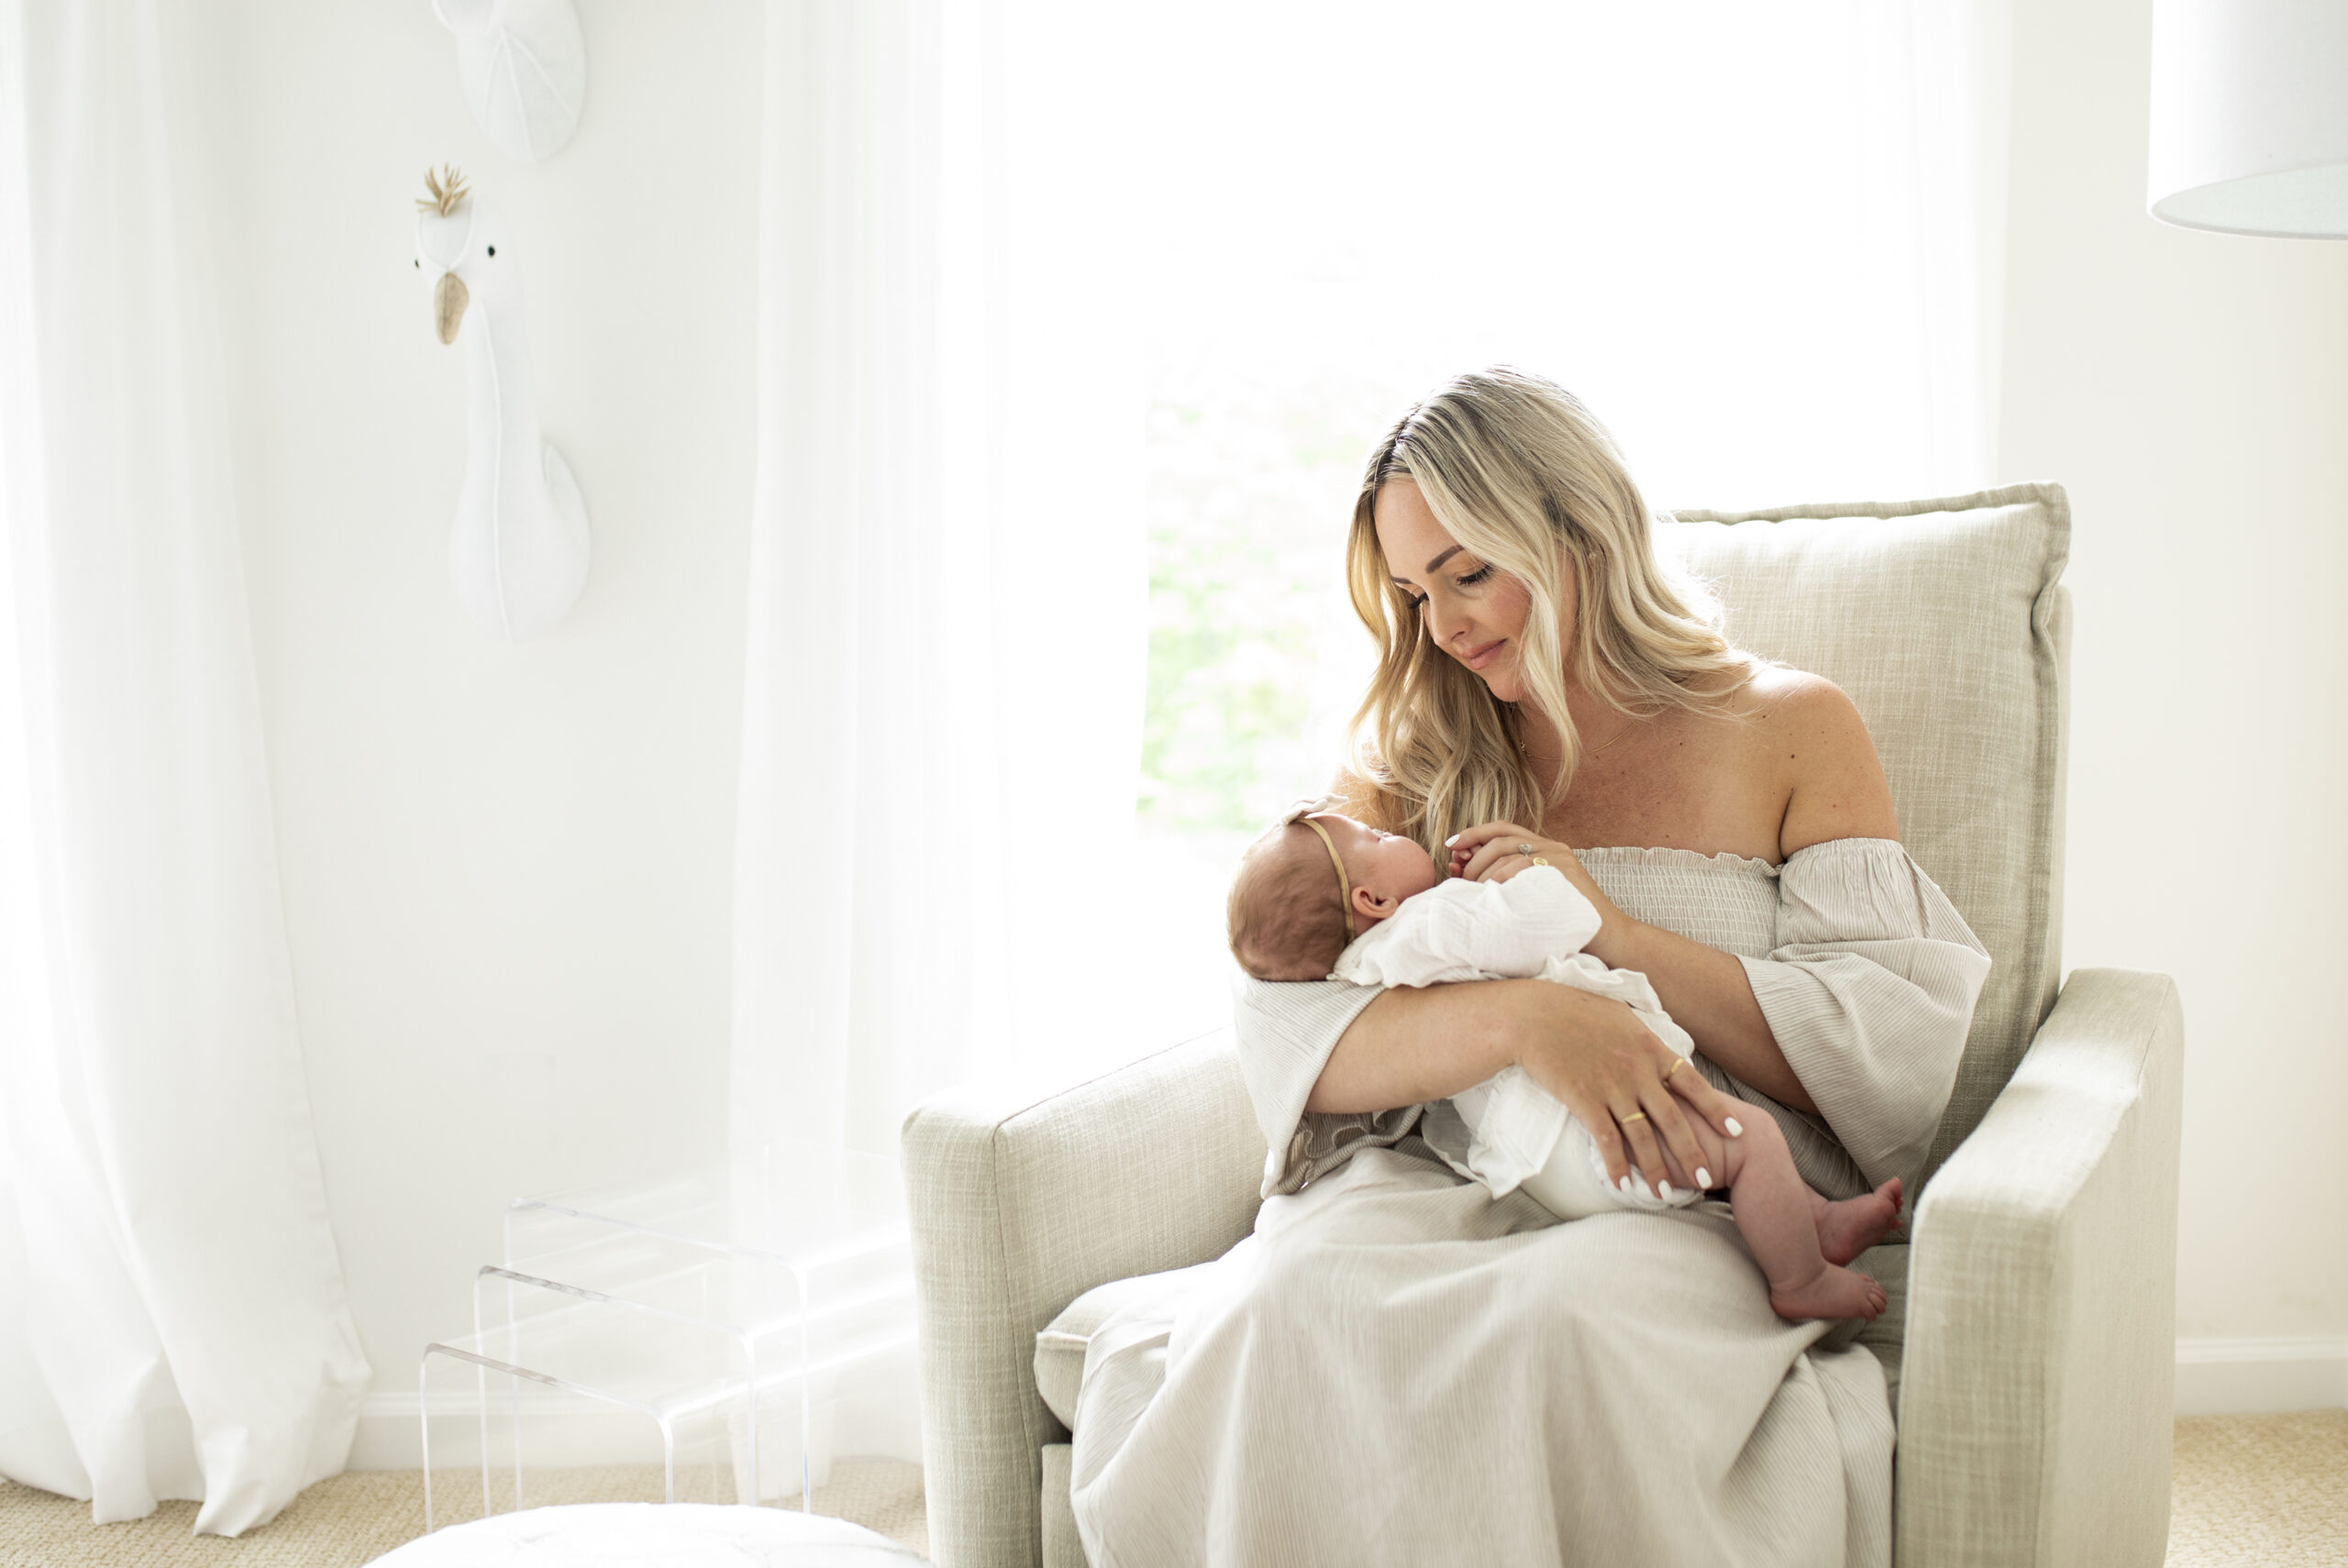 Breastfeeding Must Haves - Red White & Denim